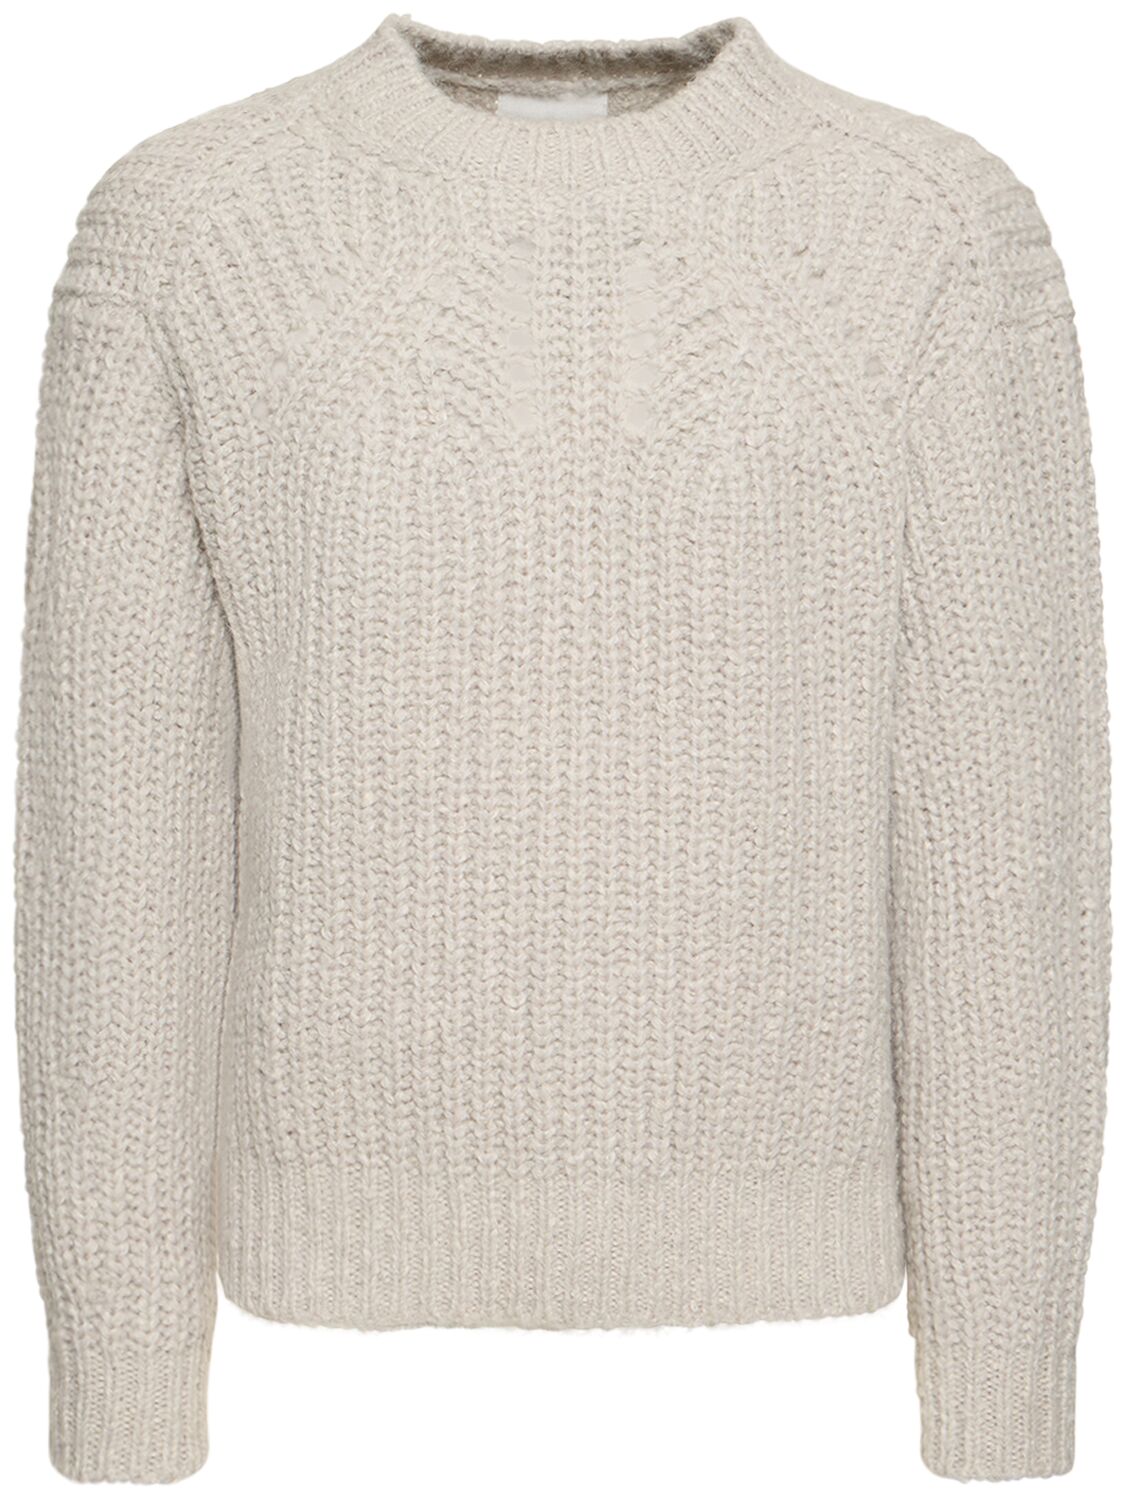 Image of Wool Blend Knit Crewneck Sweater